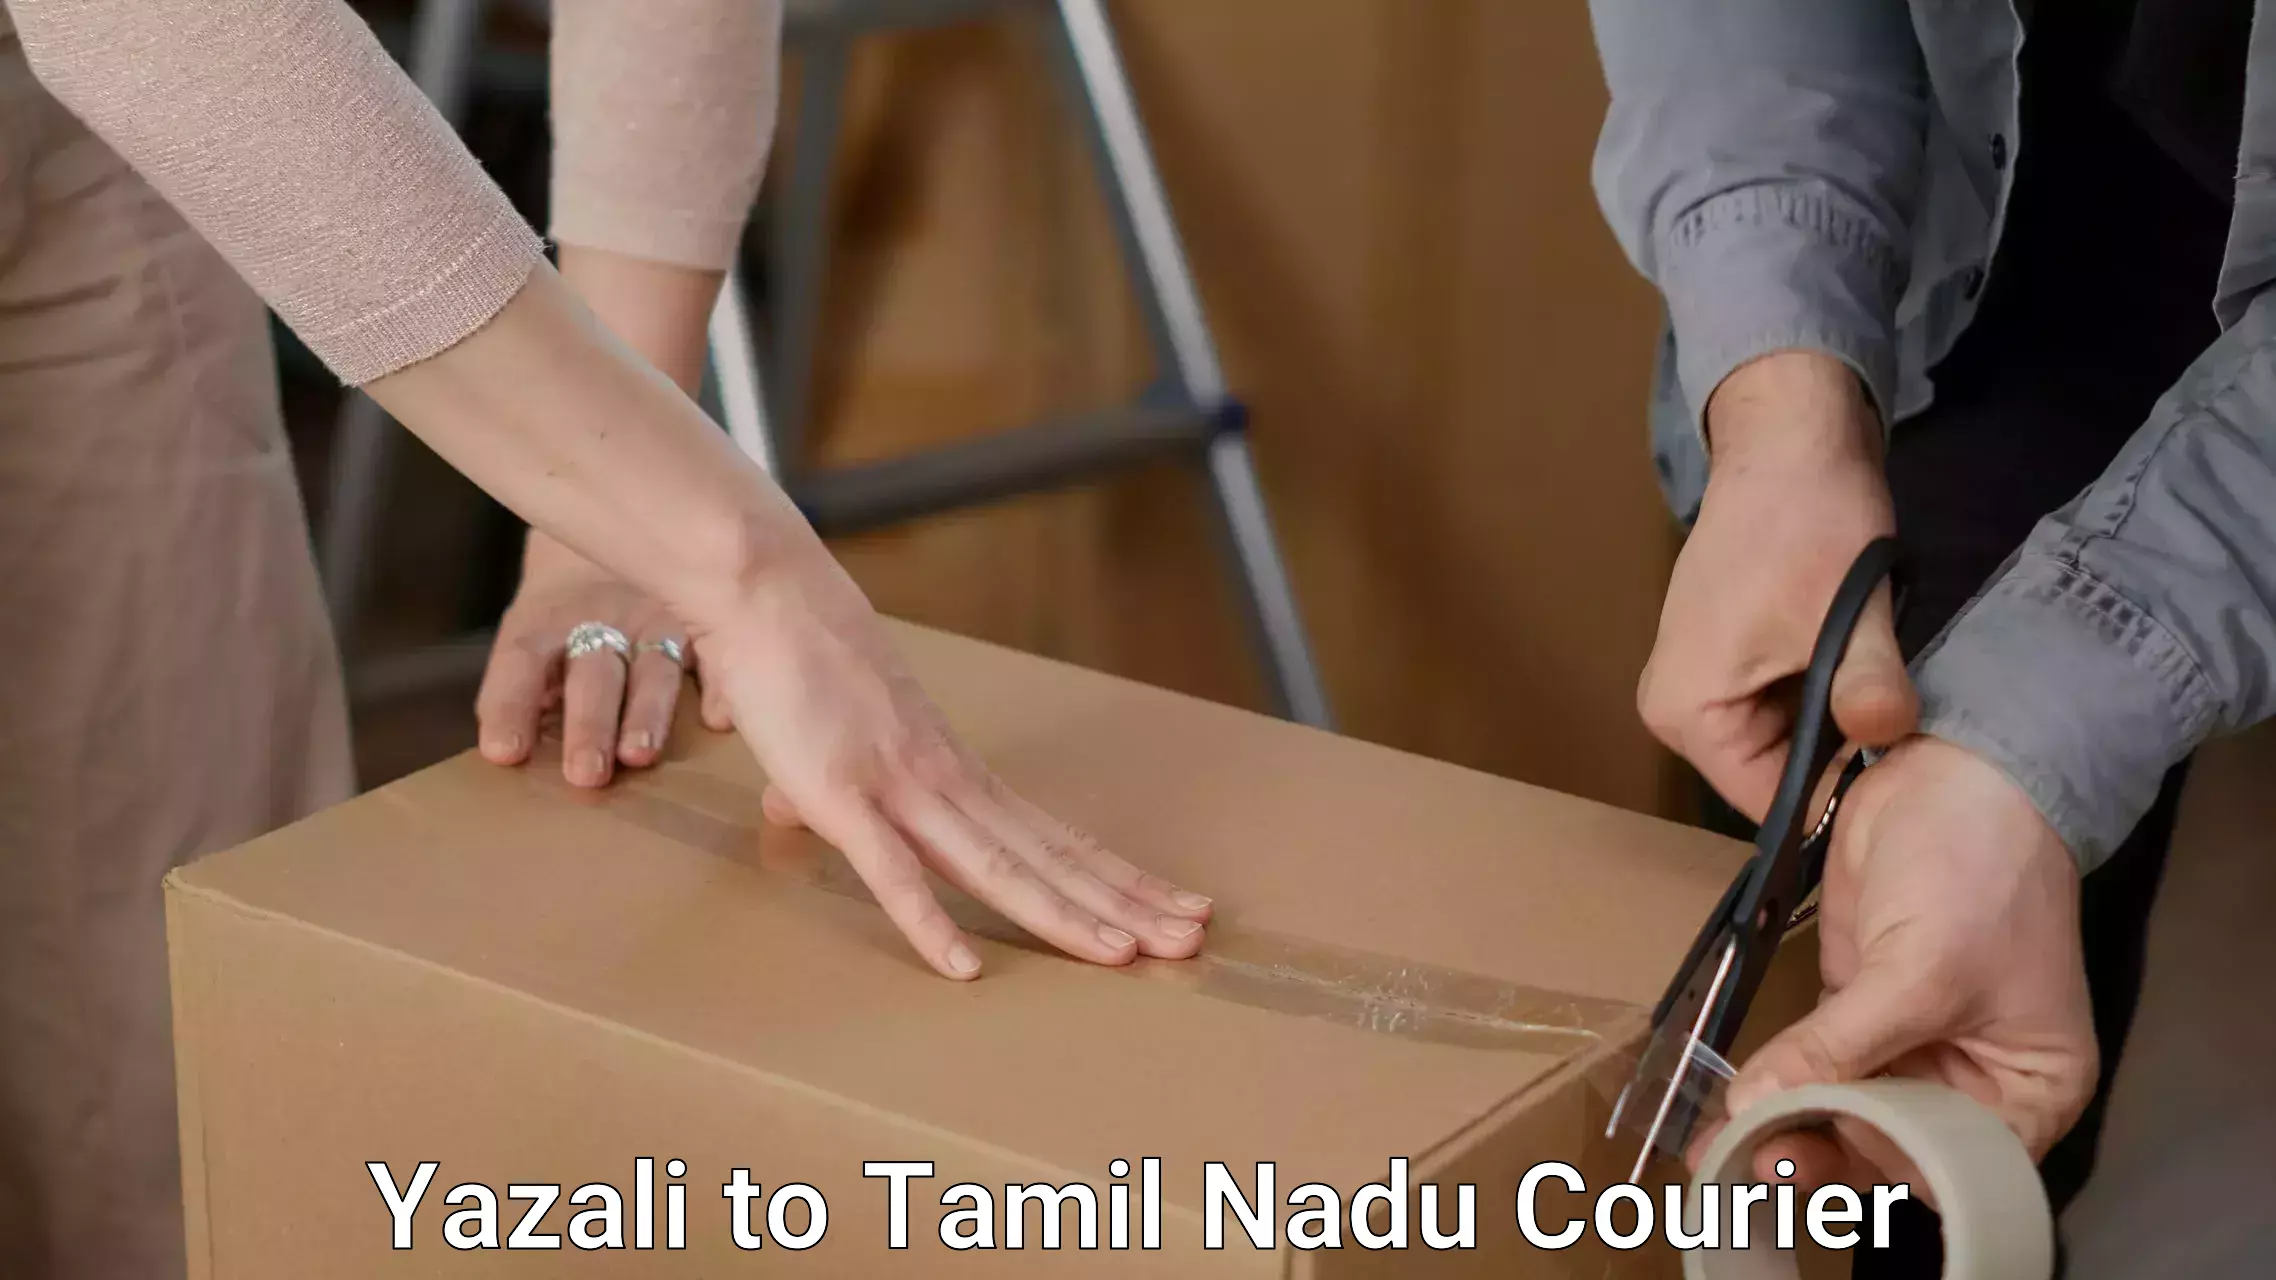 Home relocation experts Yazali to Tamil Nadu